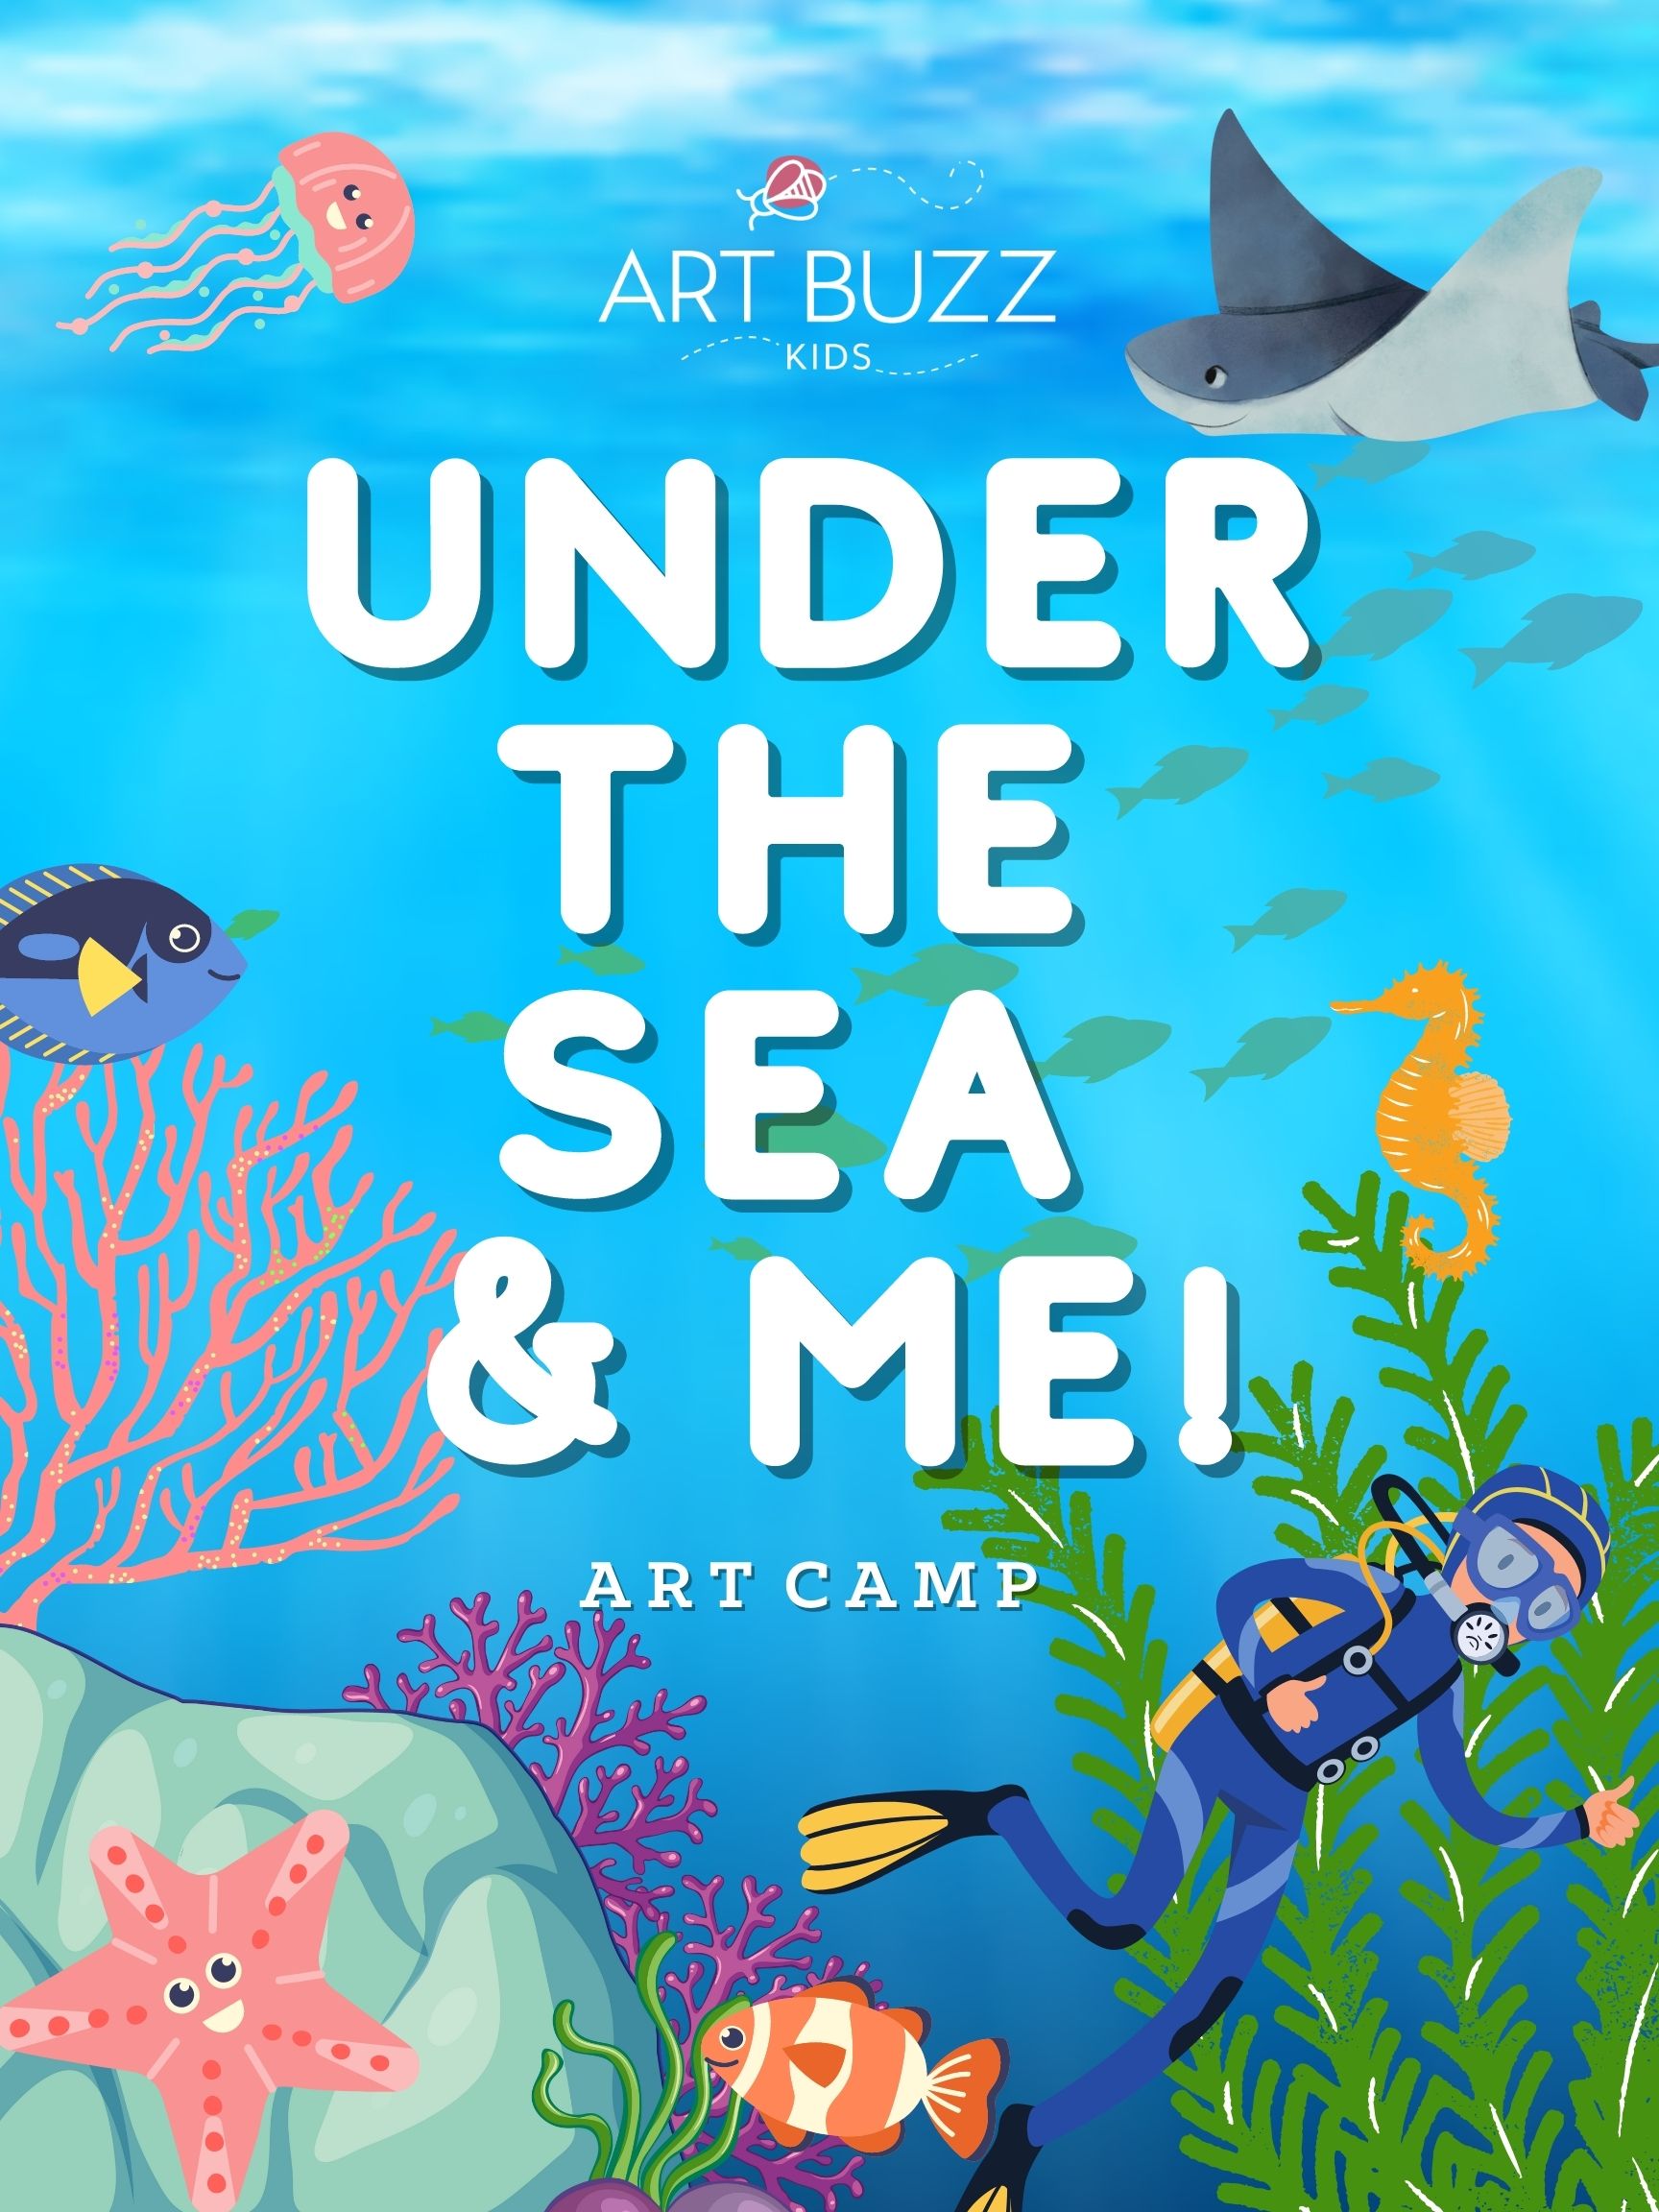 Under the Sea Kids Art Camp! June 24th-28th 10am-2pm